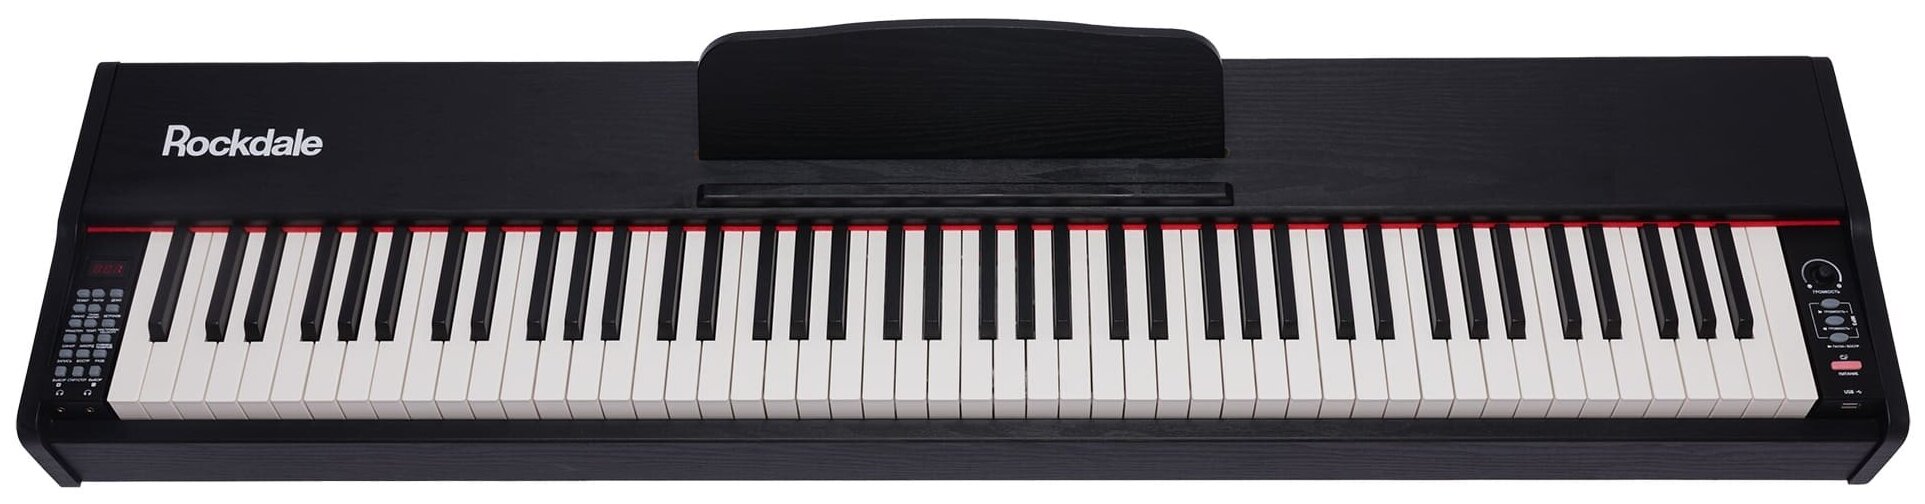 Цифровое пианино ROCKDALE Keys RDP-3088, 88 клавиш